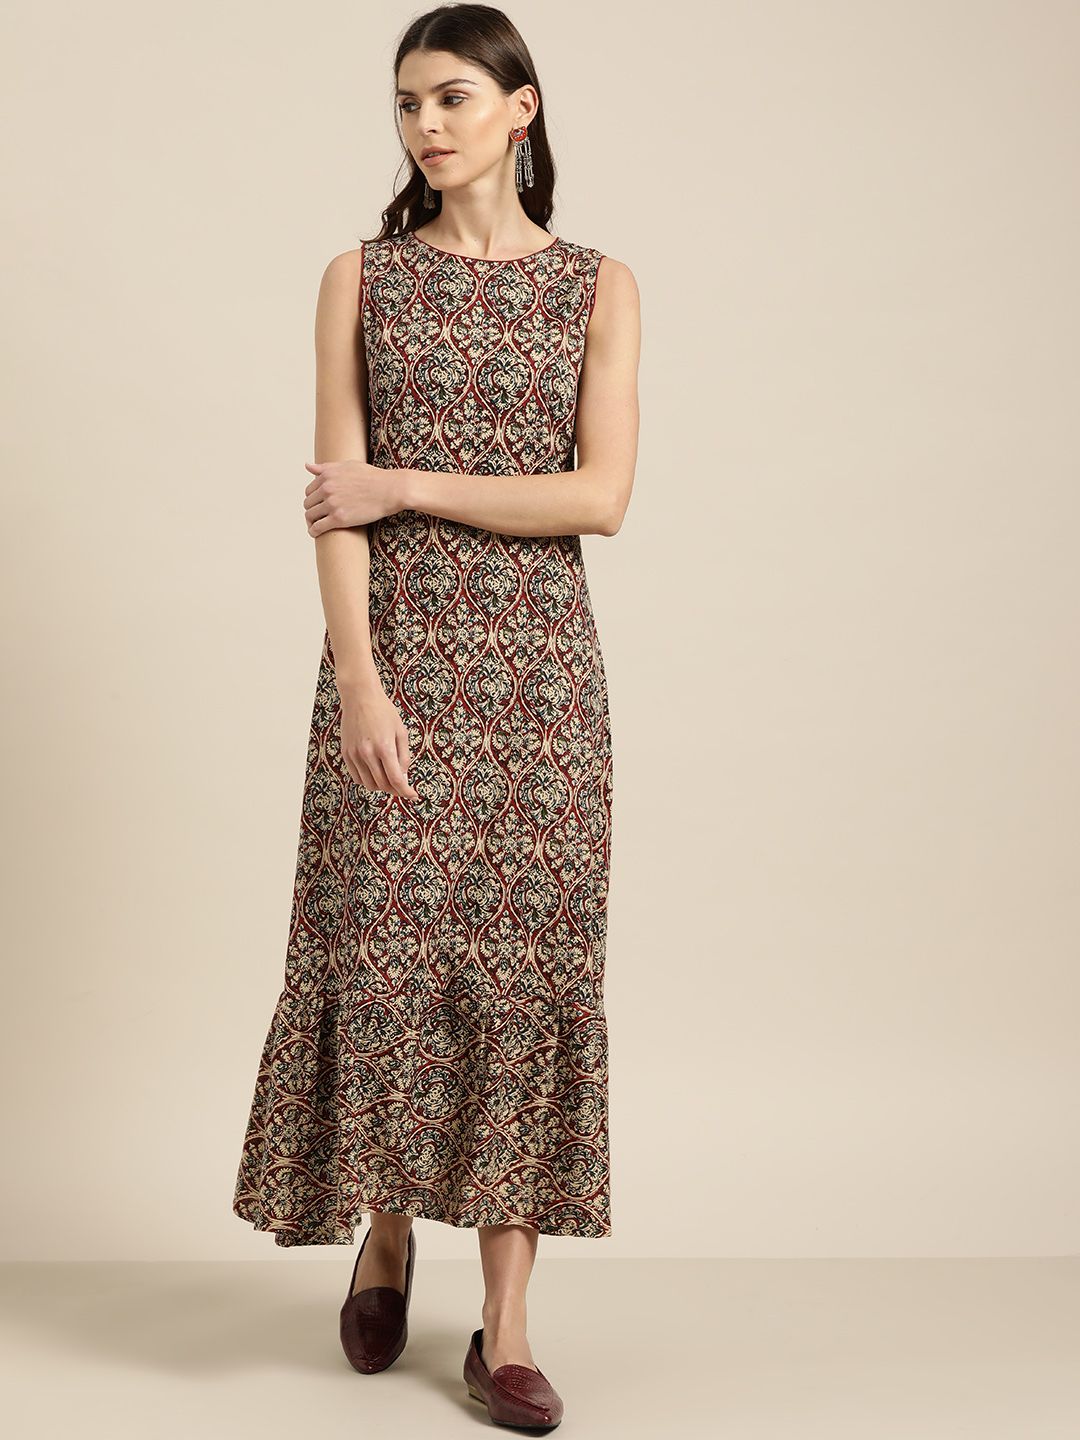 Shae by SASSAFRAS Women Beige & Maroon Printed A-Line Maxi Dress Price in India